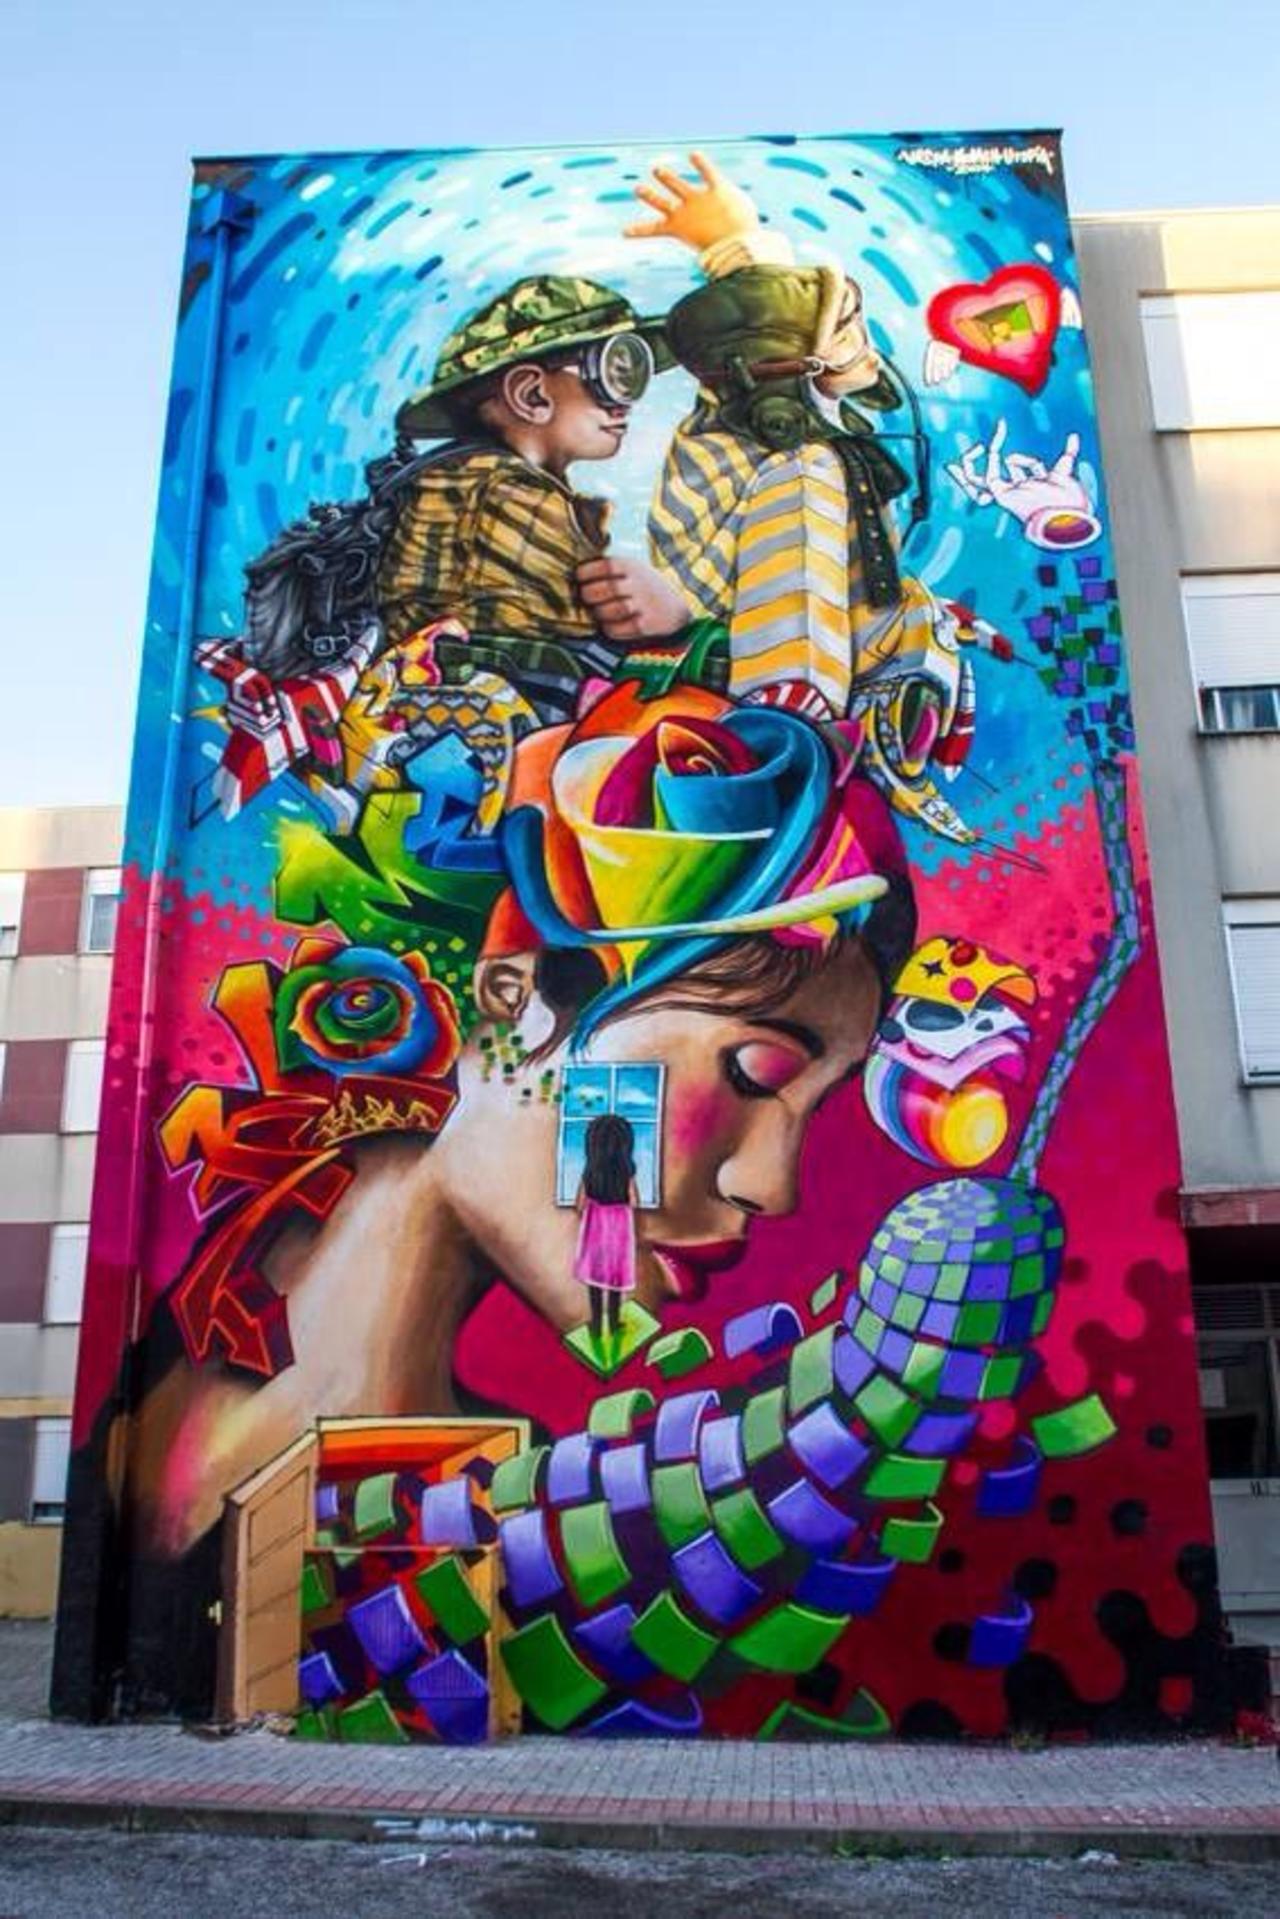 RT @GoogleStreetArt: Large scale Street Art by Nomem, PDF Utopia & Vespa in Sacavém, Portugal
#art #mural #streetart http://t.co/Qd4zflECkD